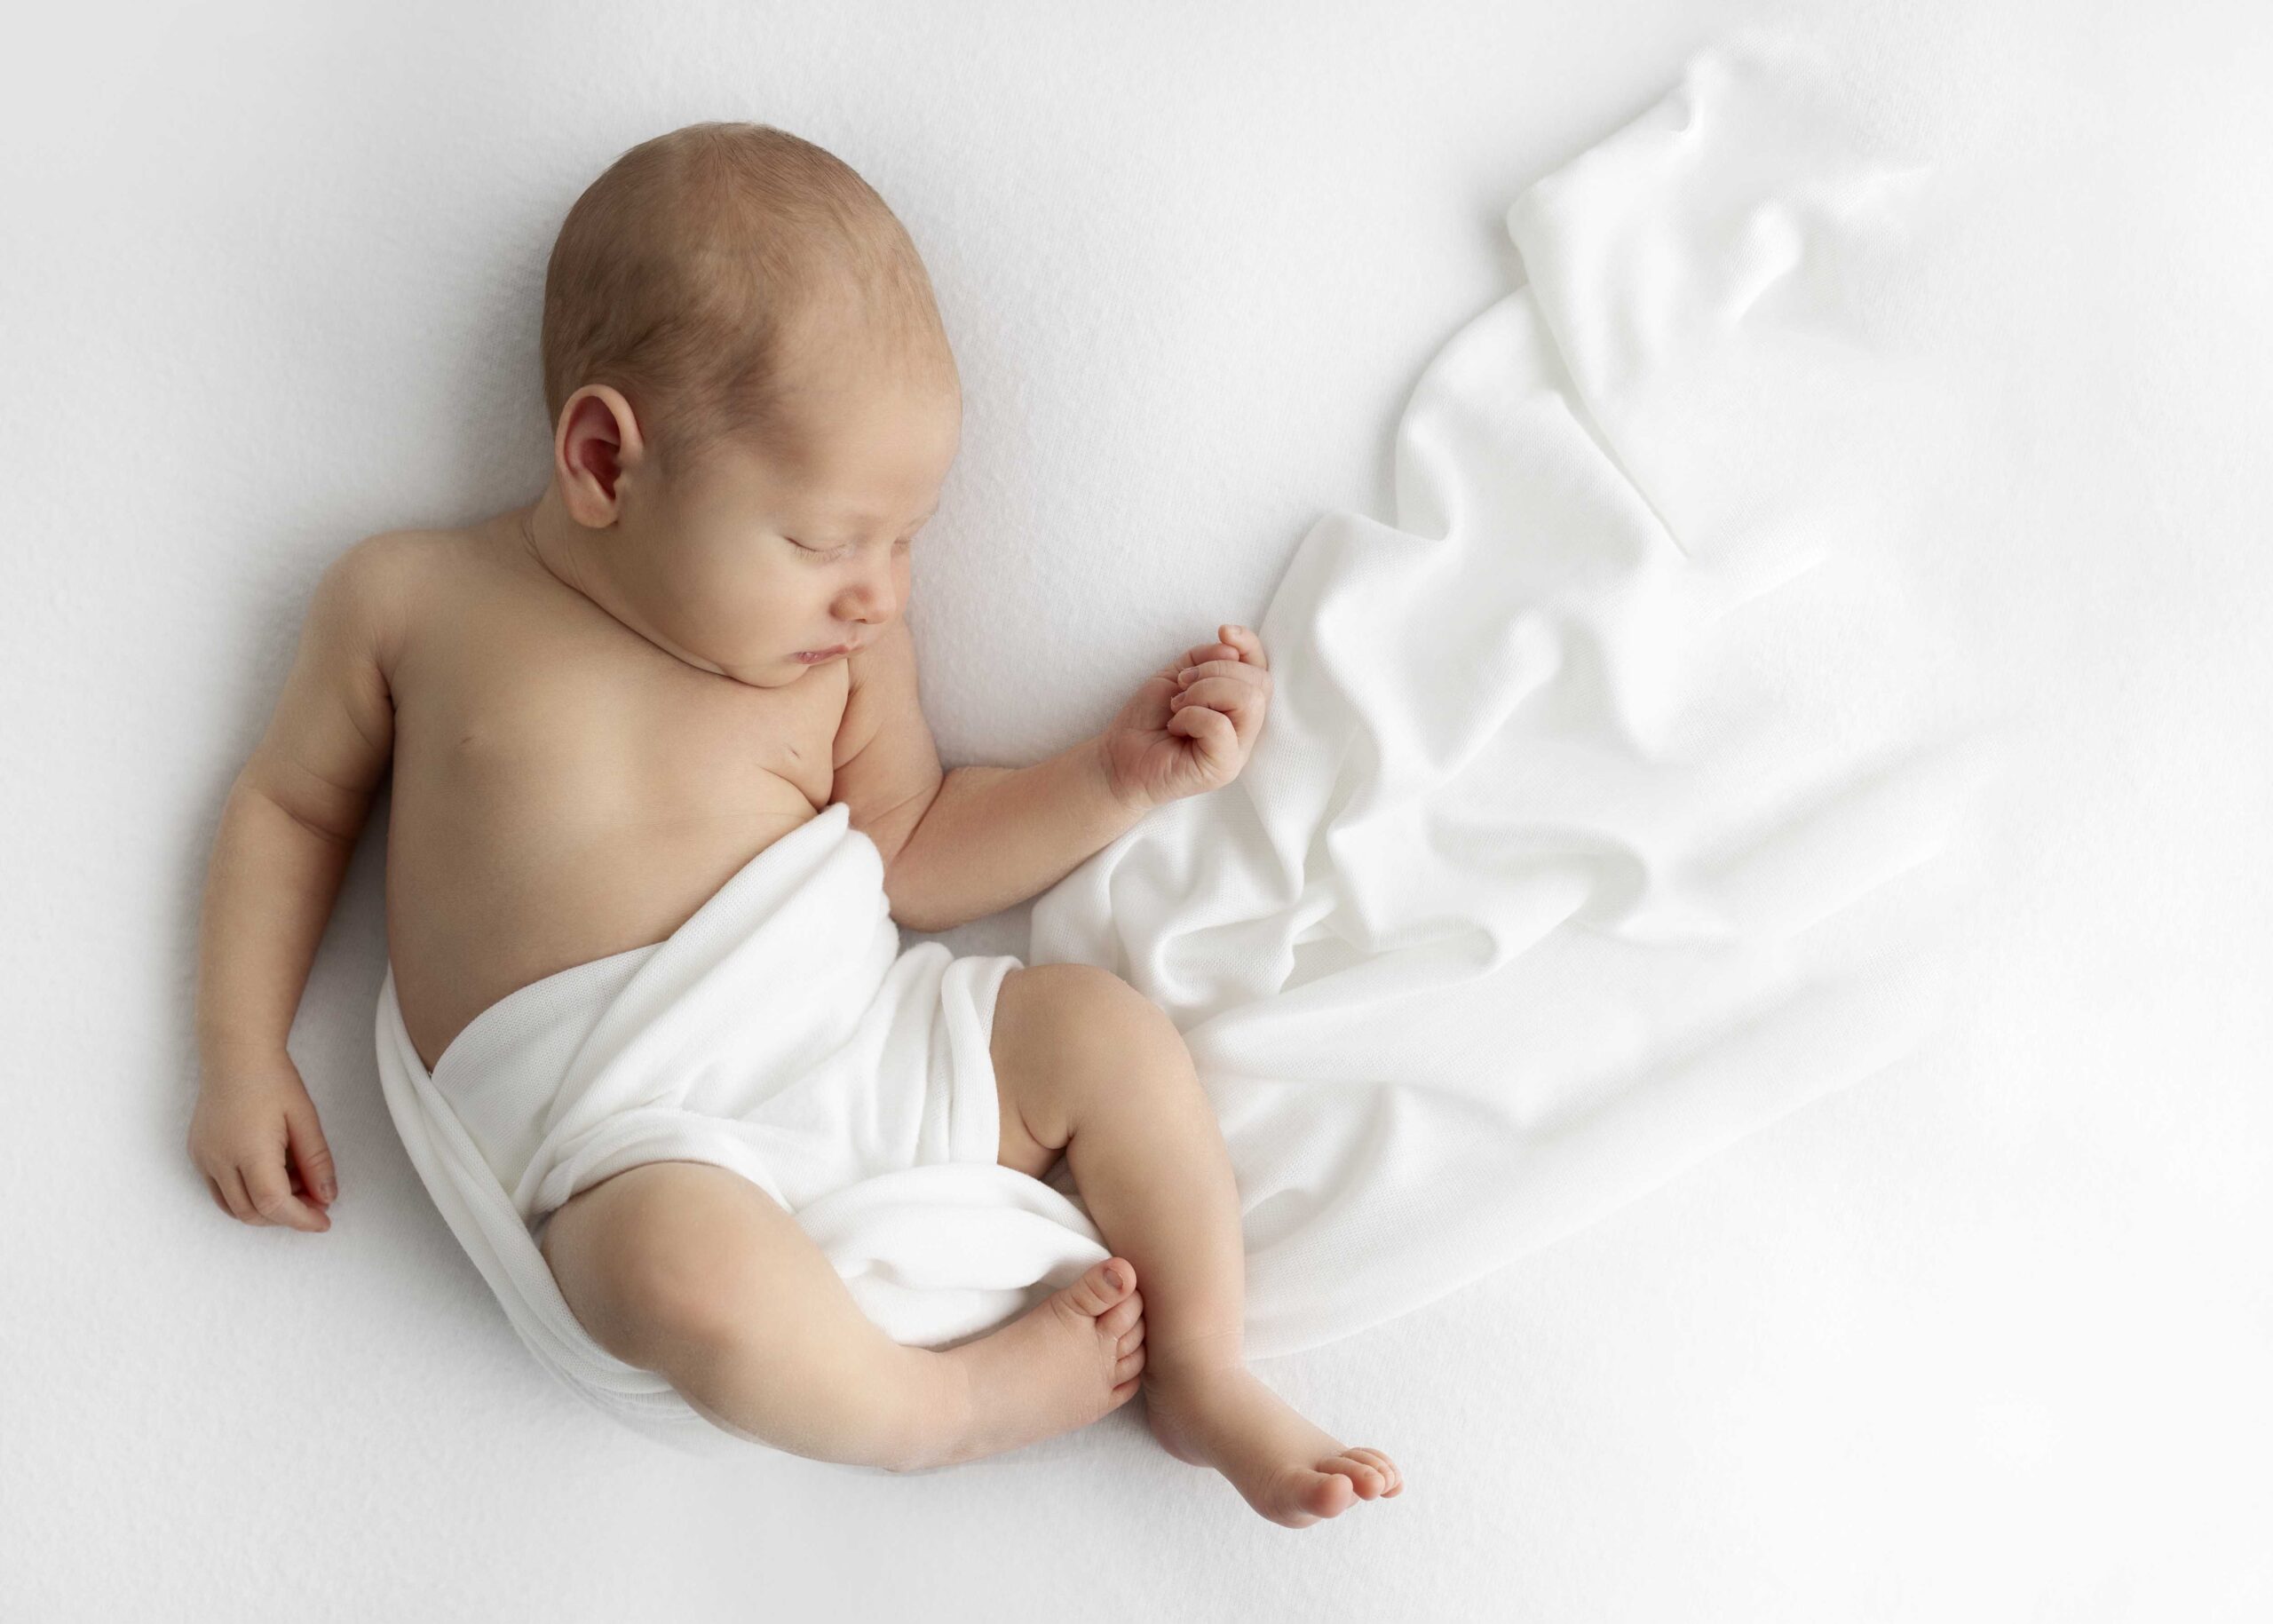 Newborn with white blanket trailing behind him while he sleeps